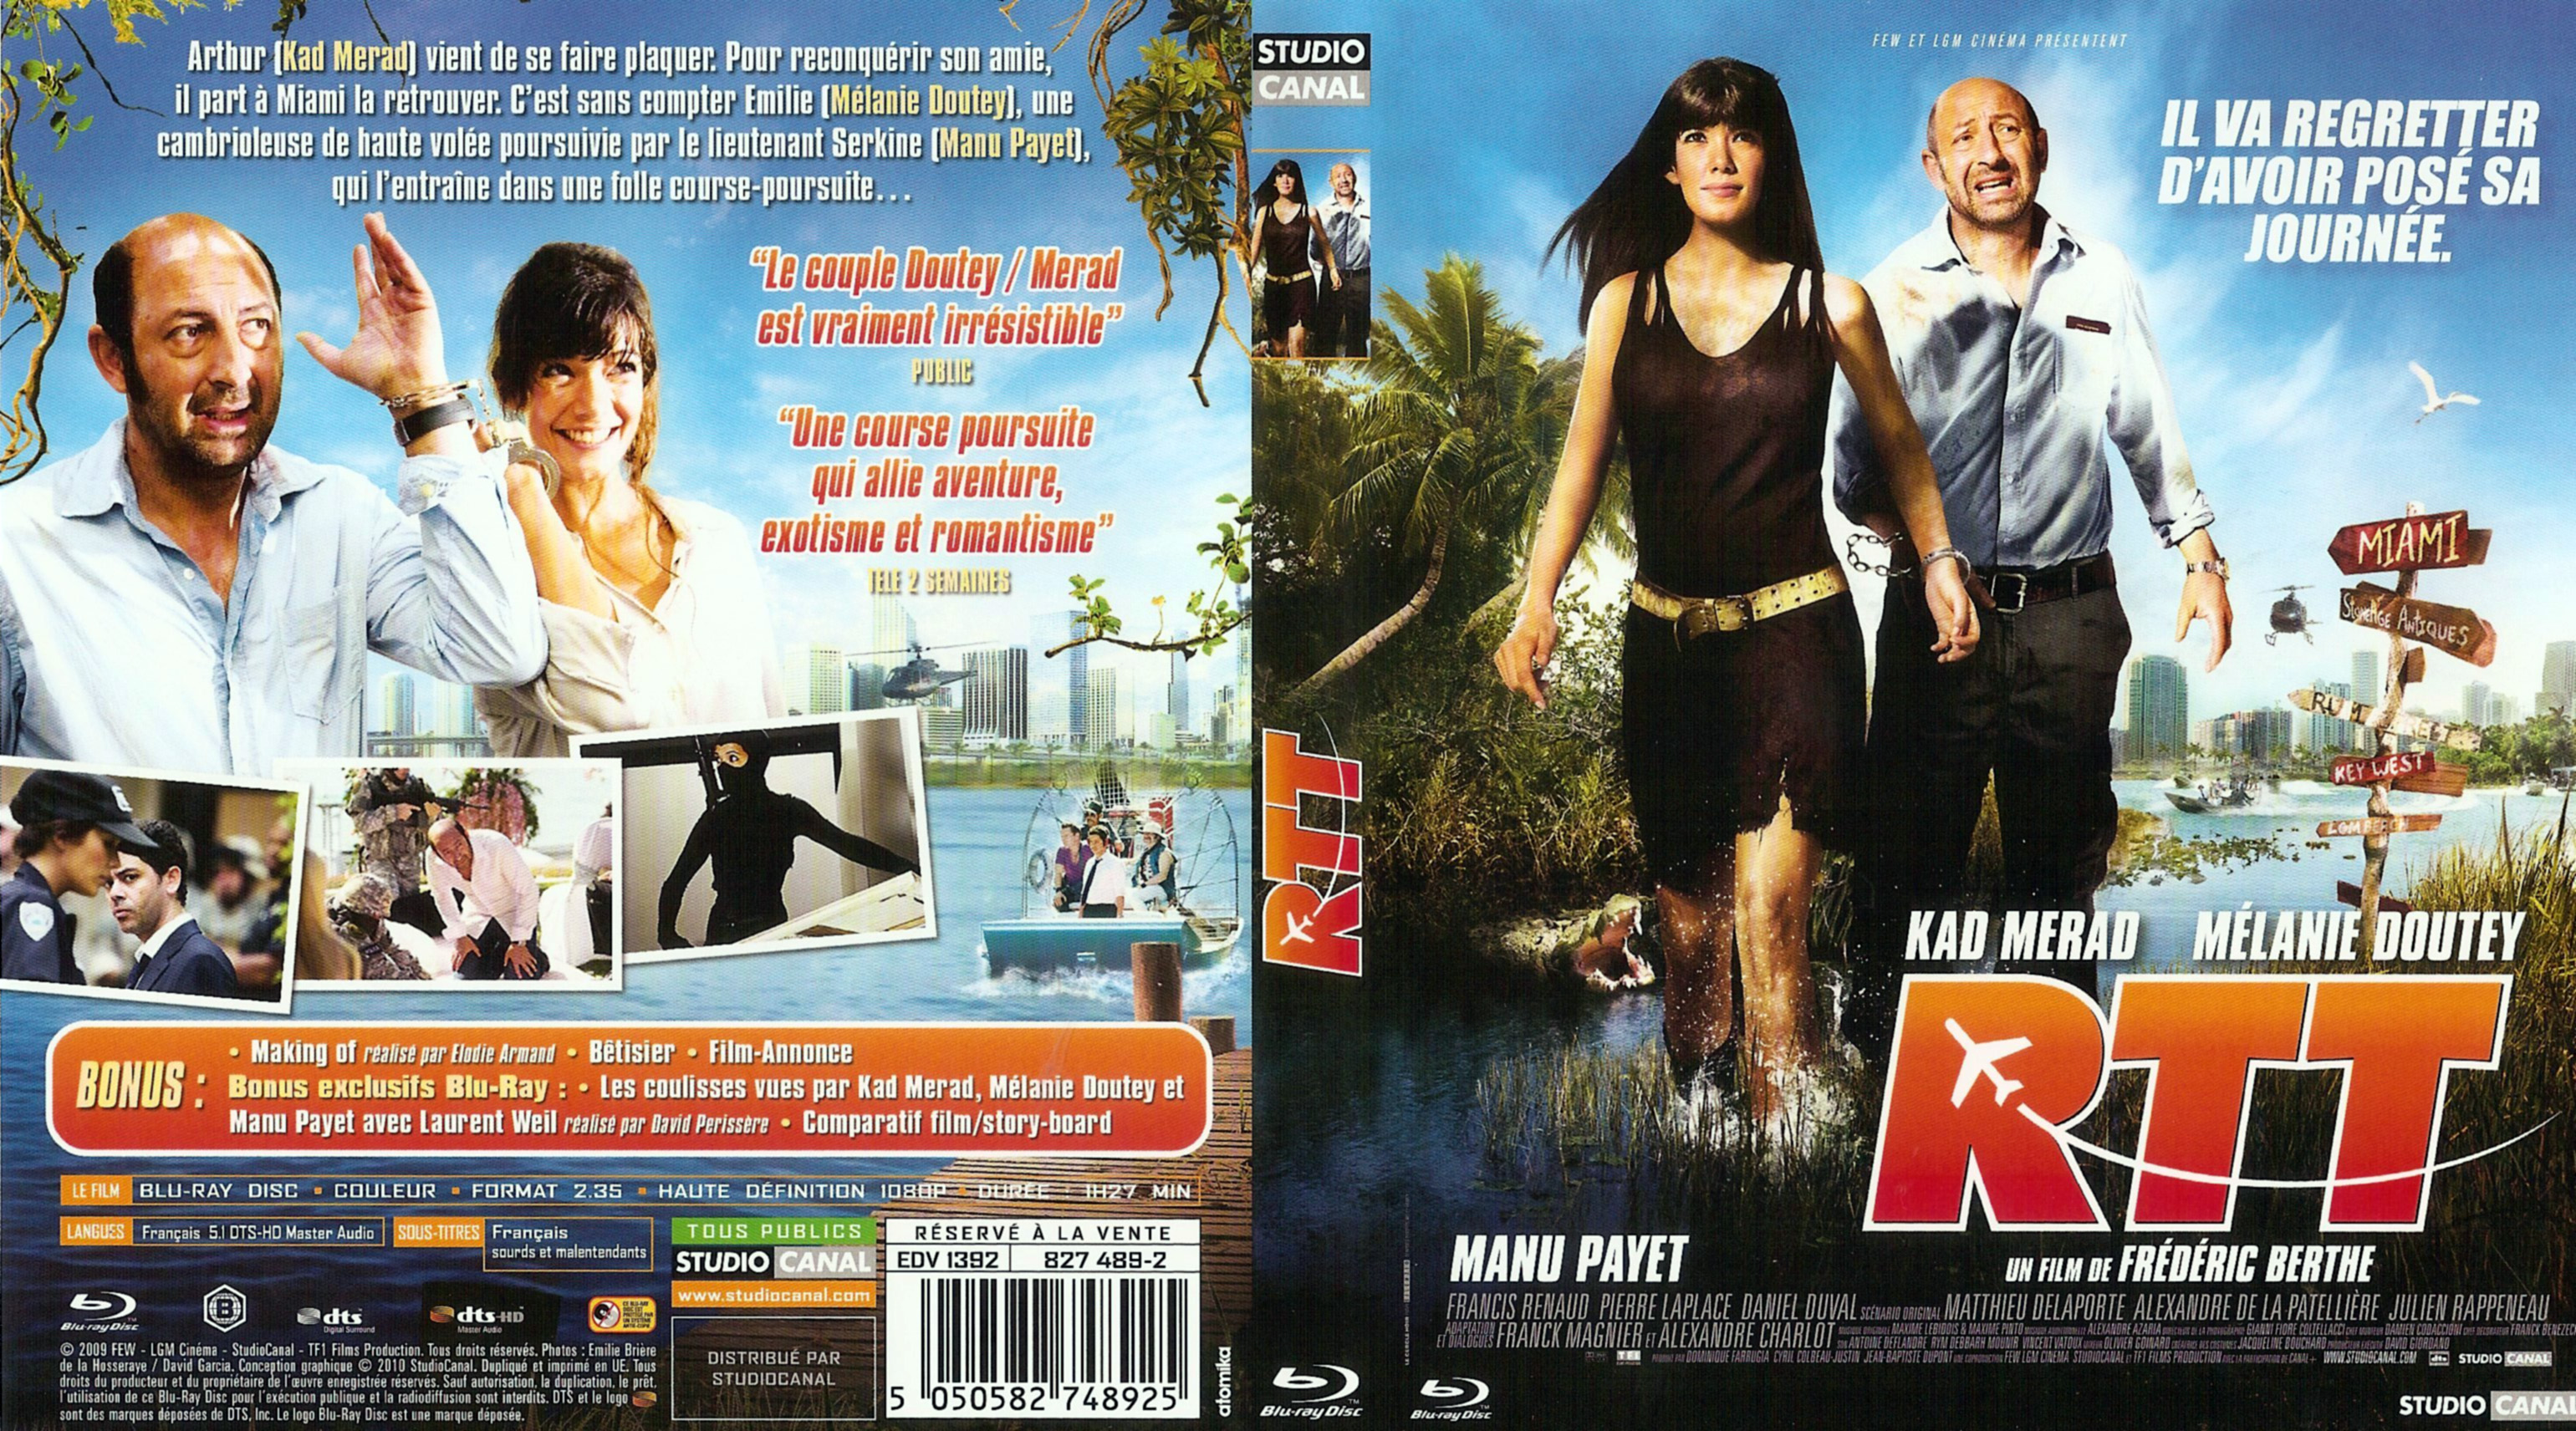 Jaquette DVD RTT (BLU-RAY)